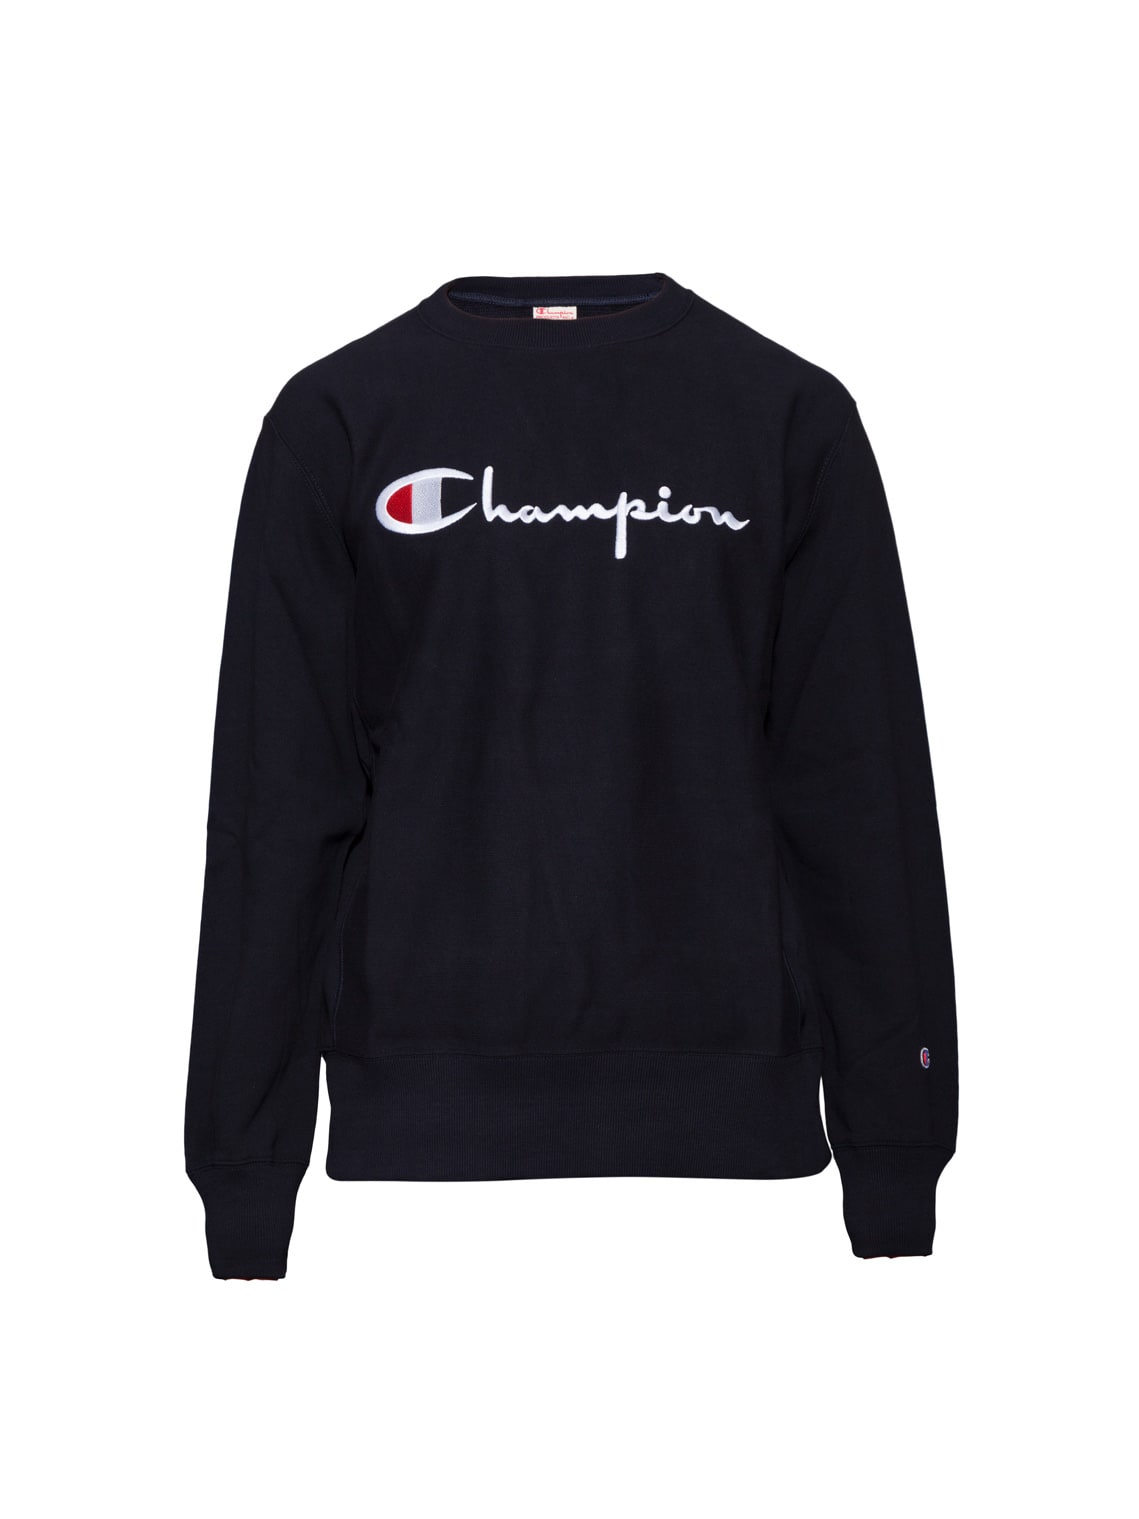 champion sweatshirt price